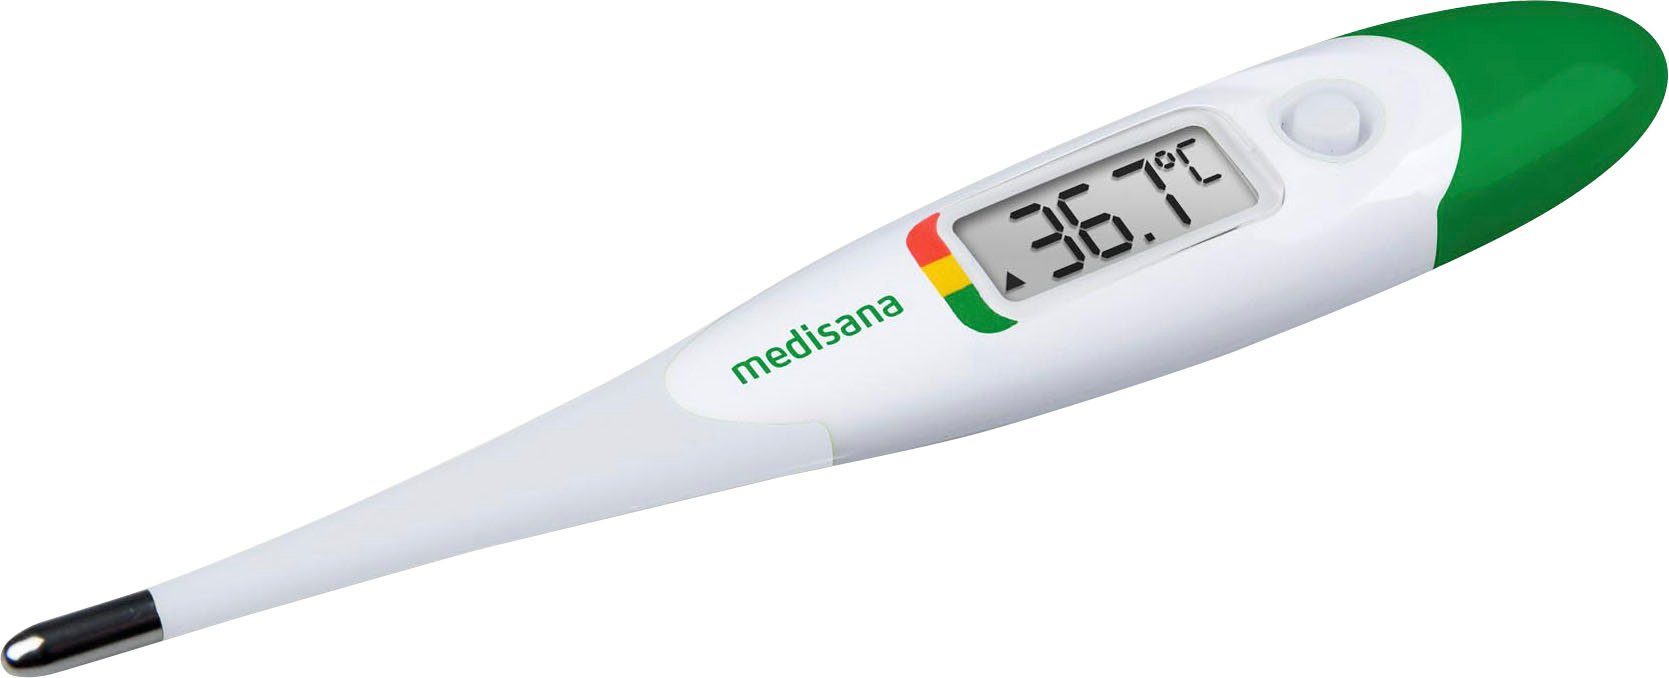 Fieberthermometer TM705 Medisana